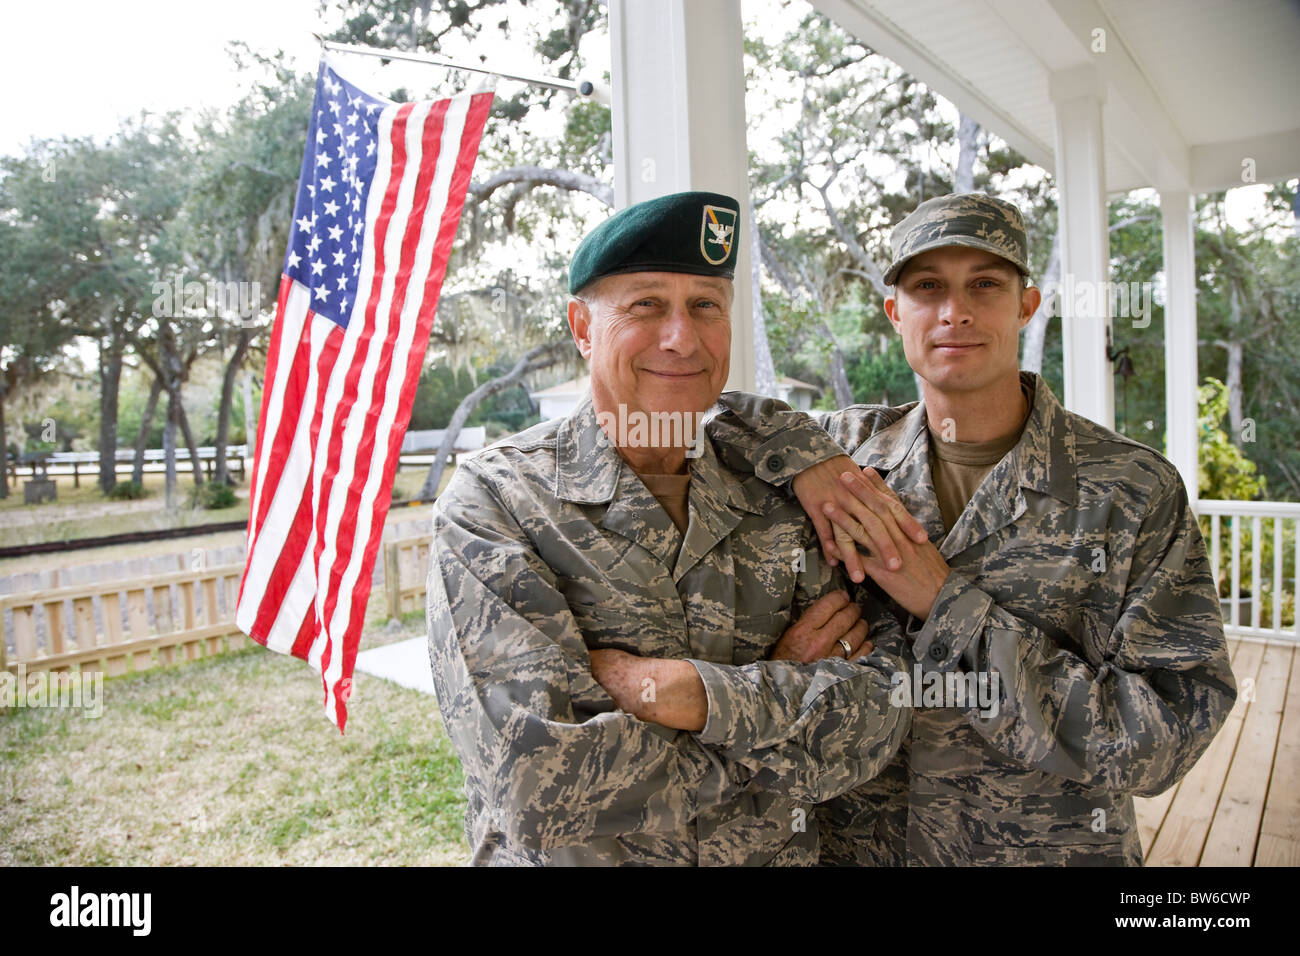 Padre e hijo en uniformes militares por bandera americana Foto de stock